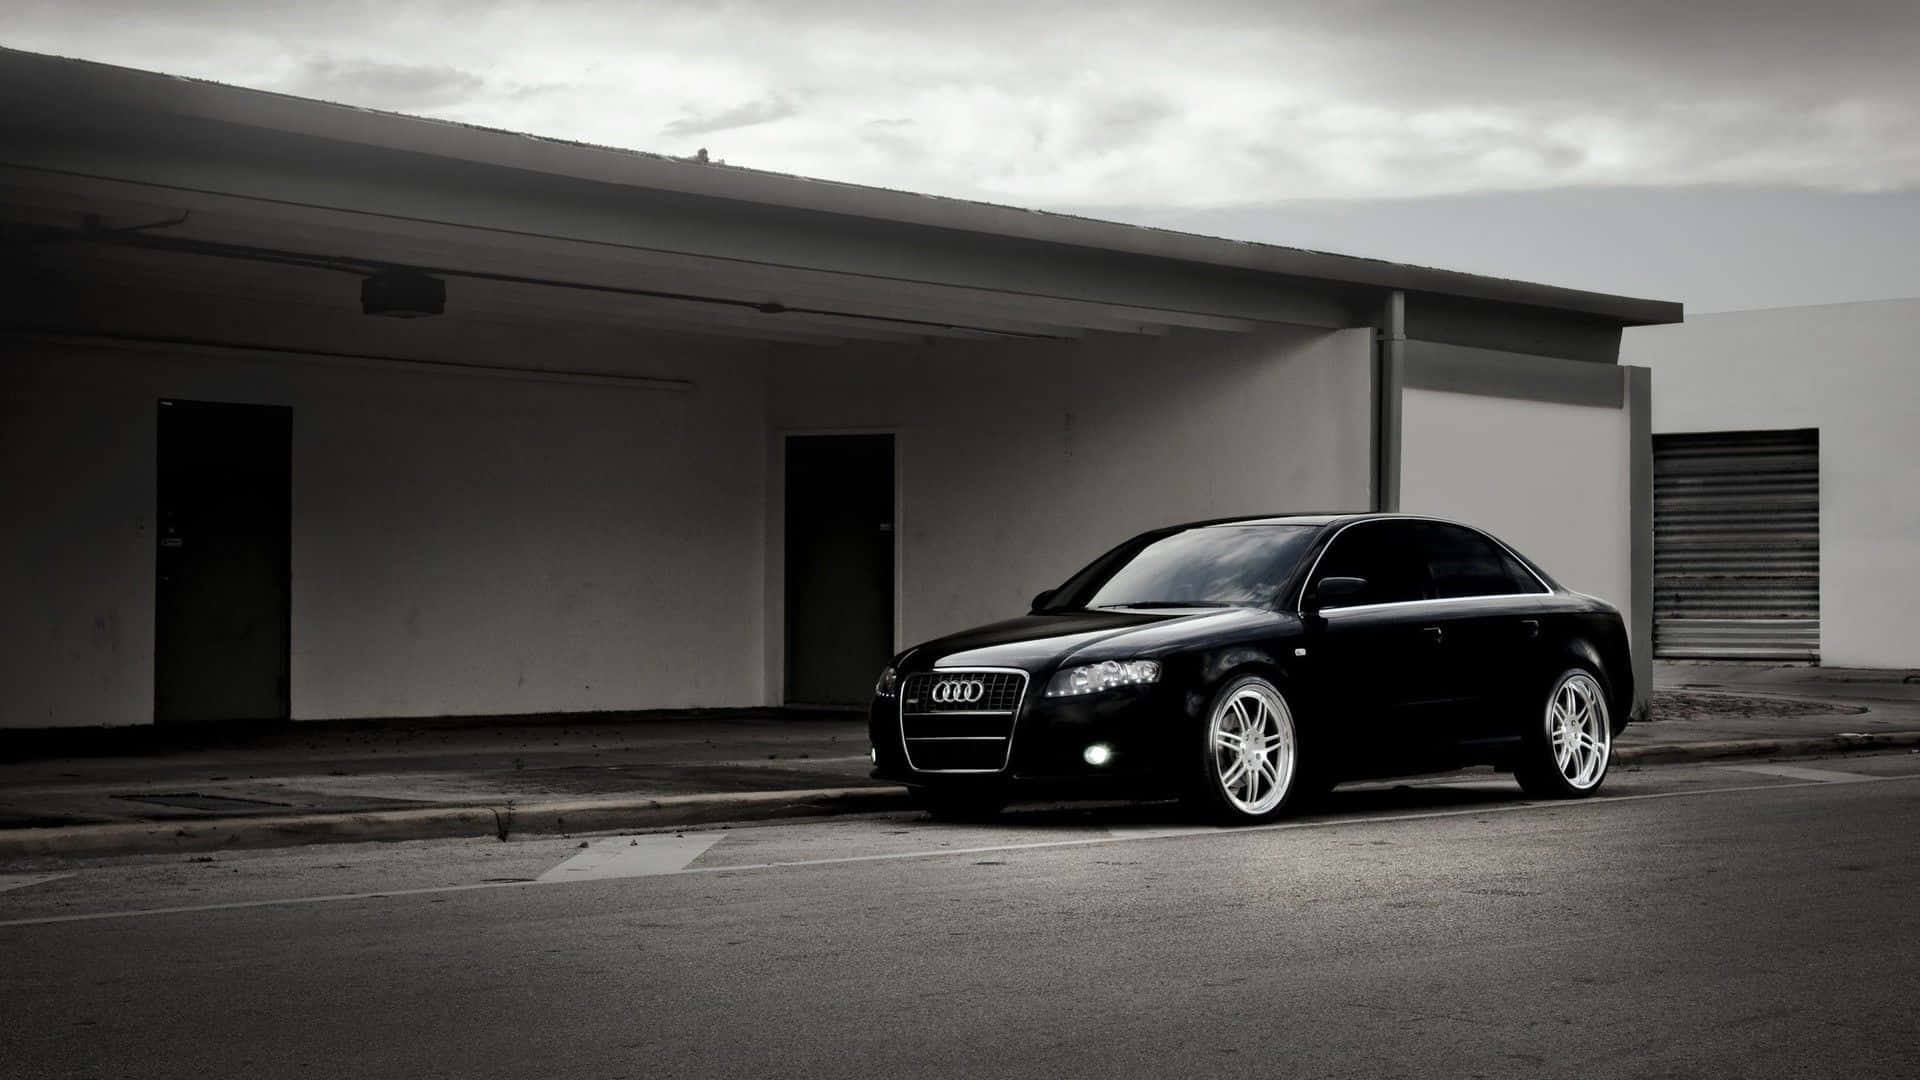 Sleek and Elegant Audi A4 in Urban Environment Wallpaper